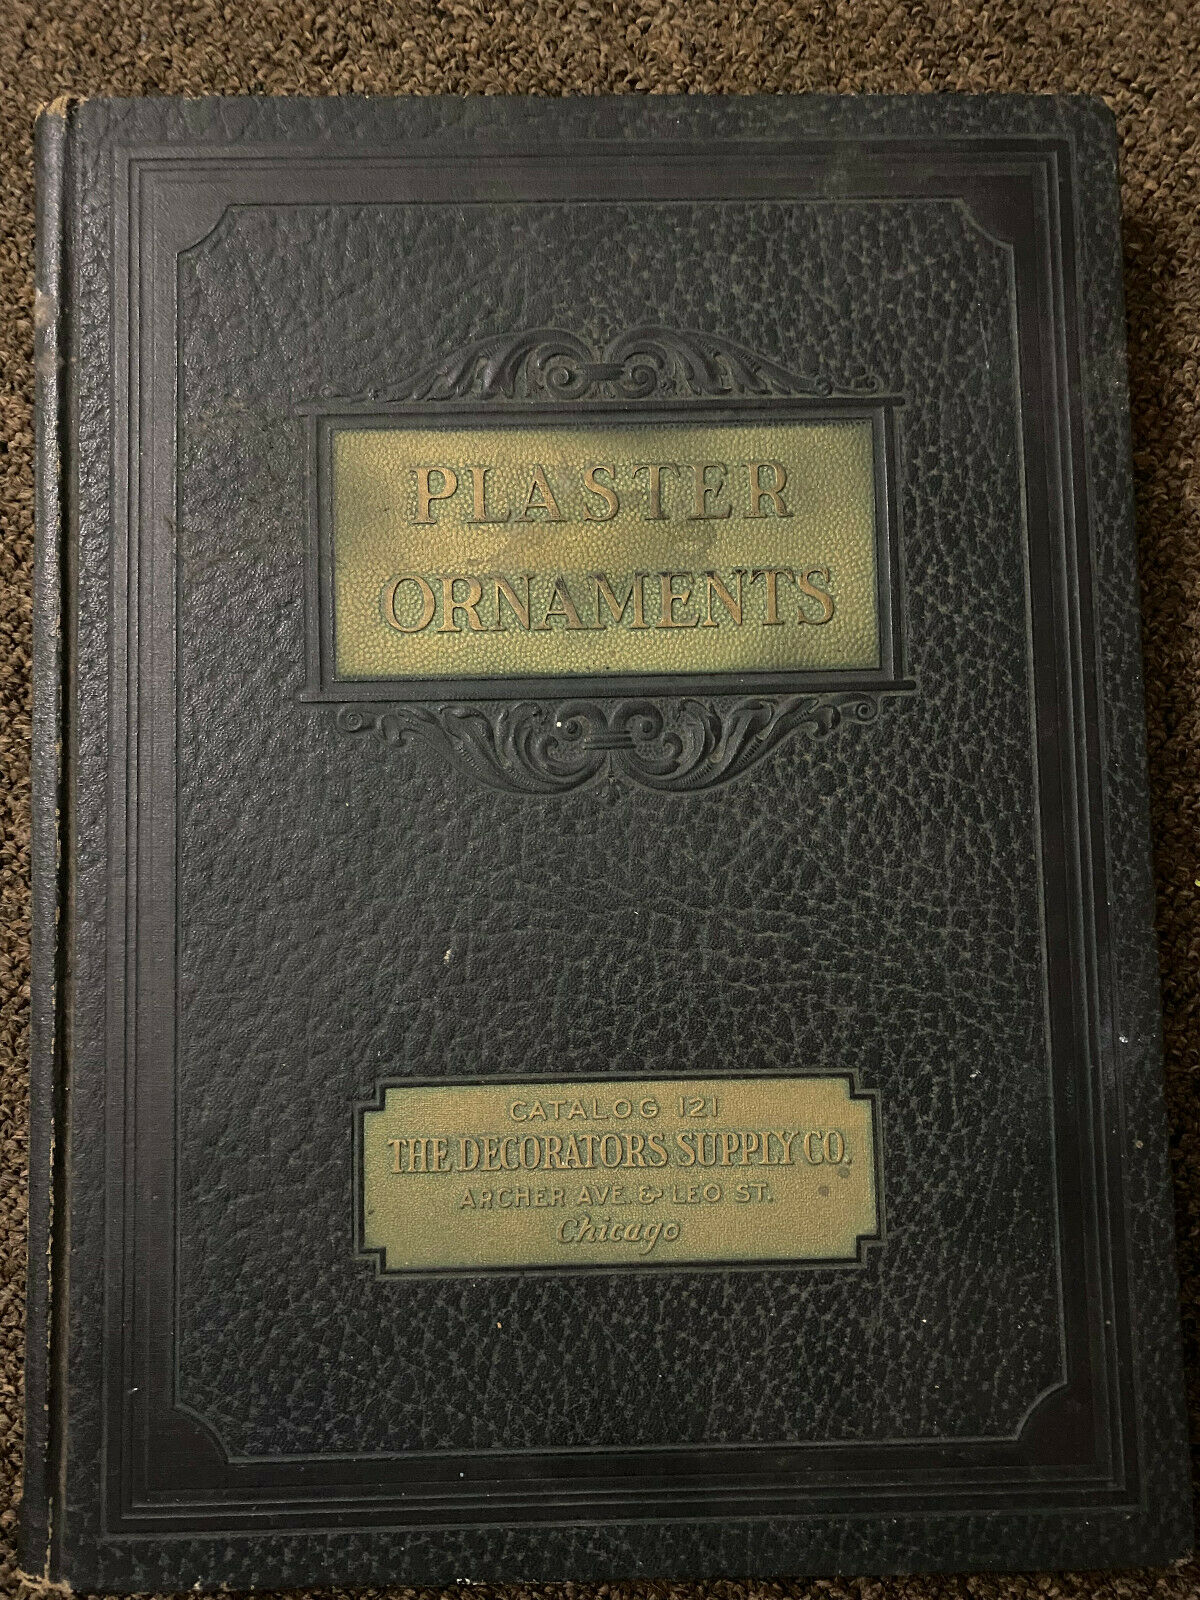 Plaster Ornaments - Decorators Supply Co. Catalog 121